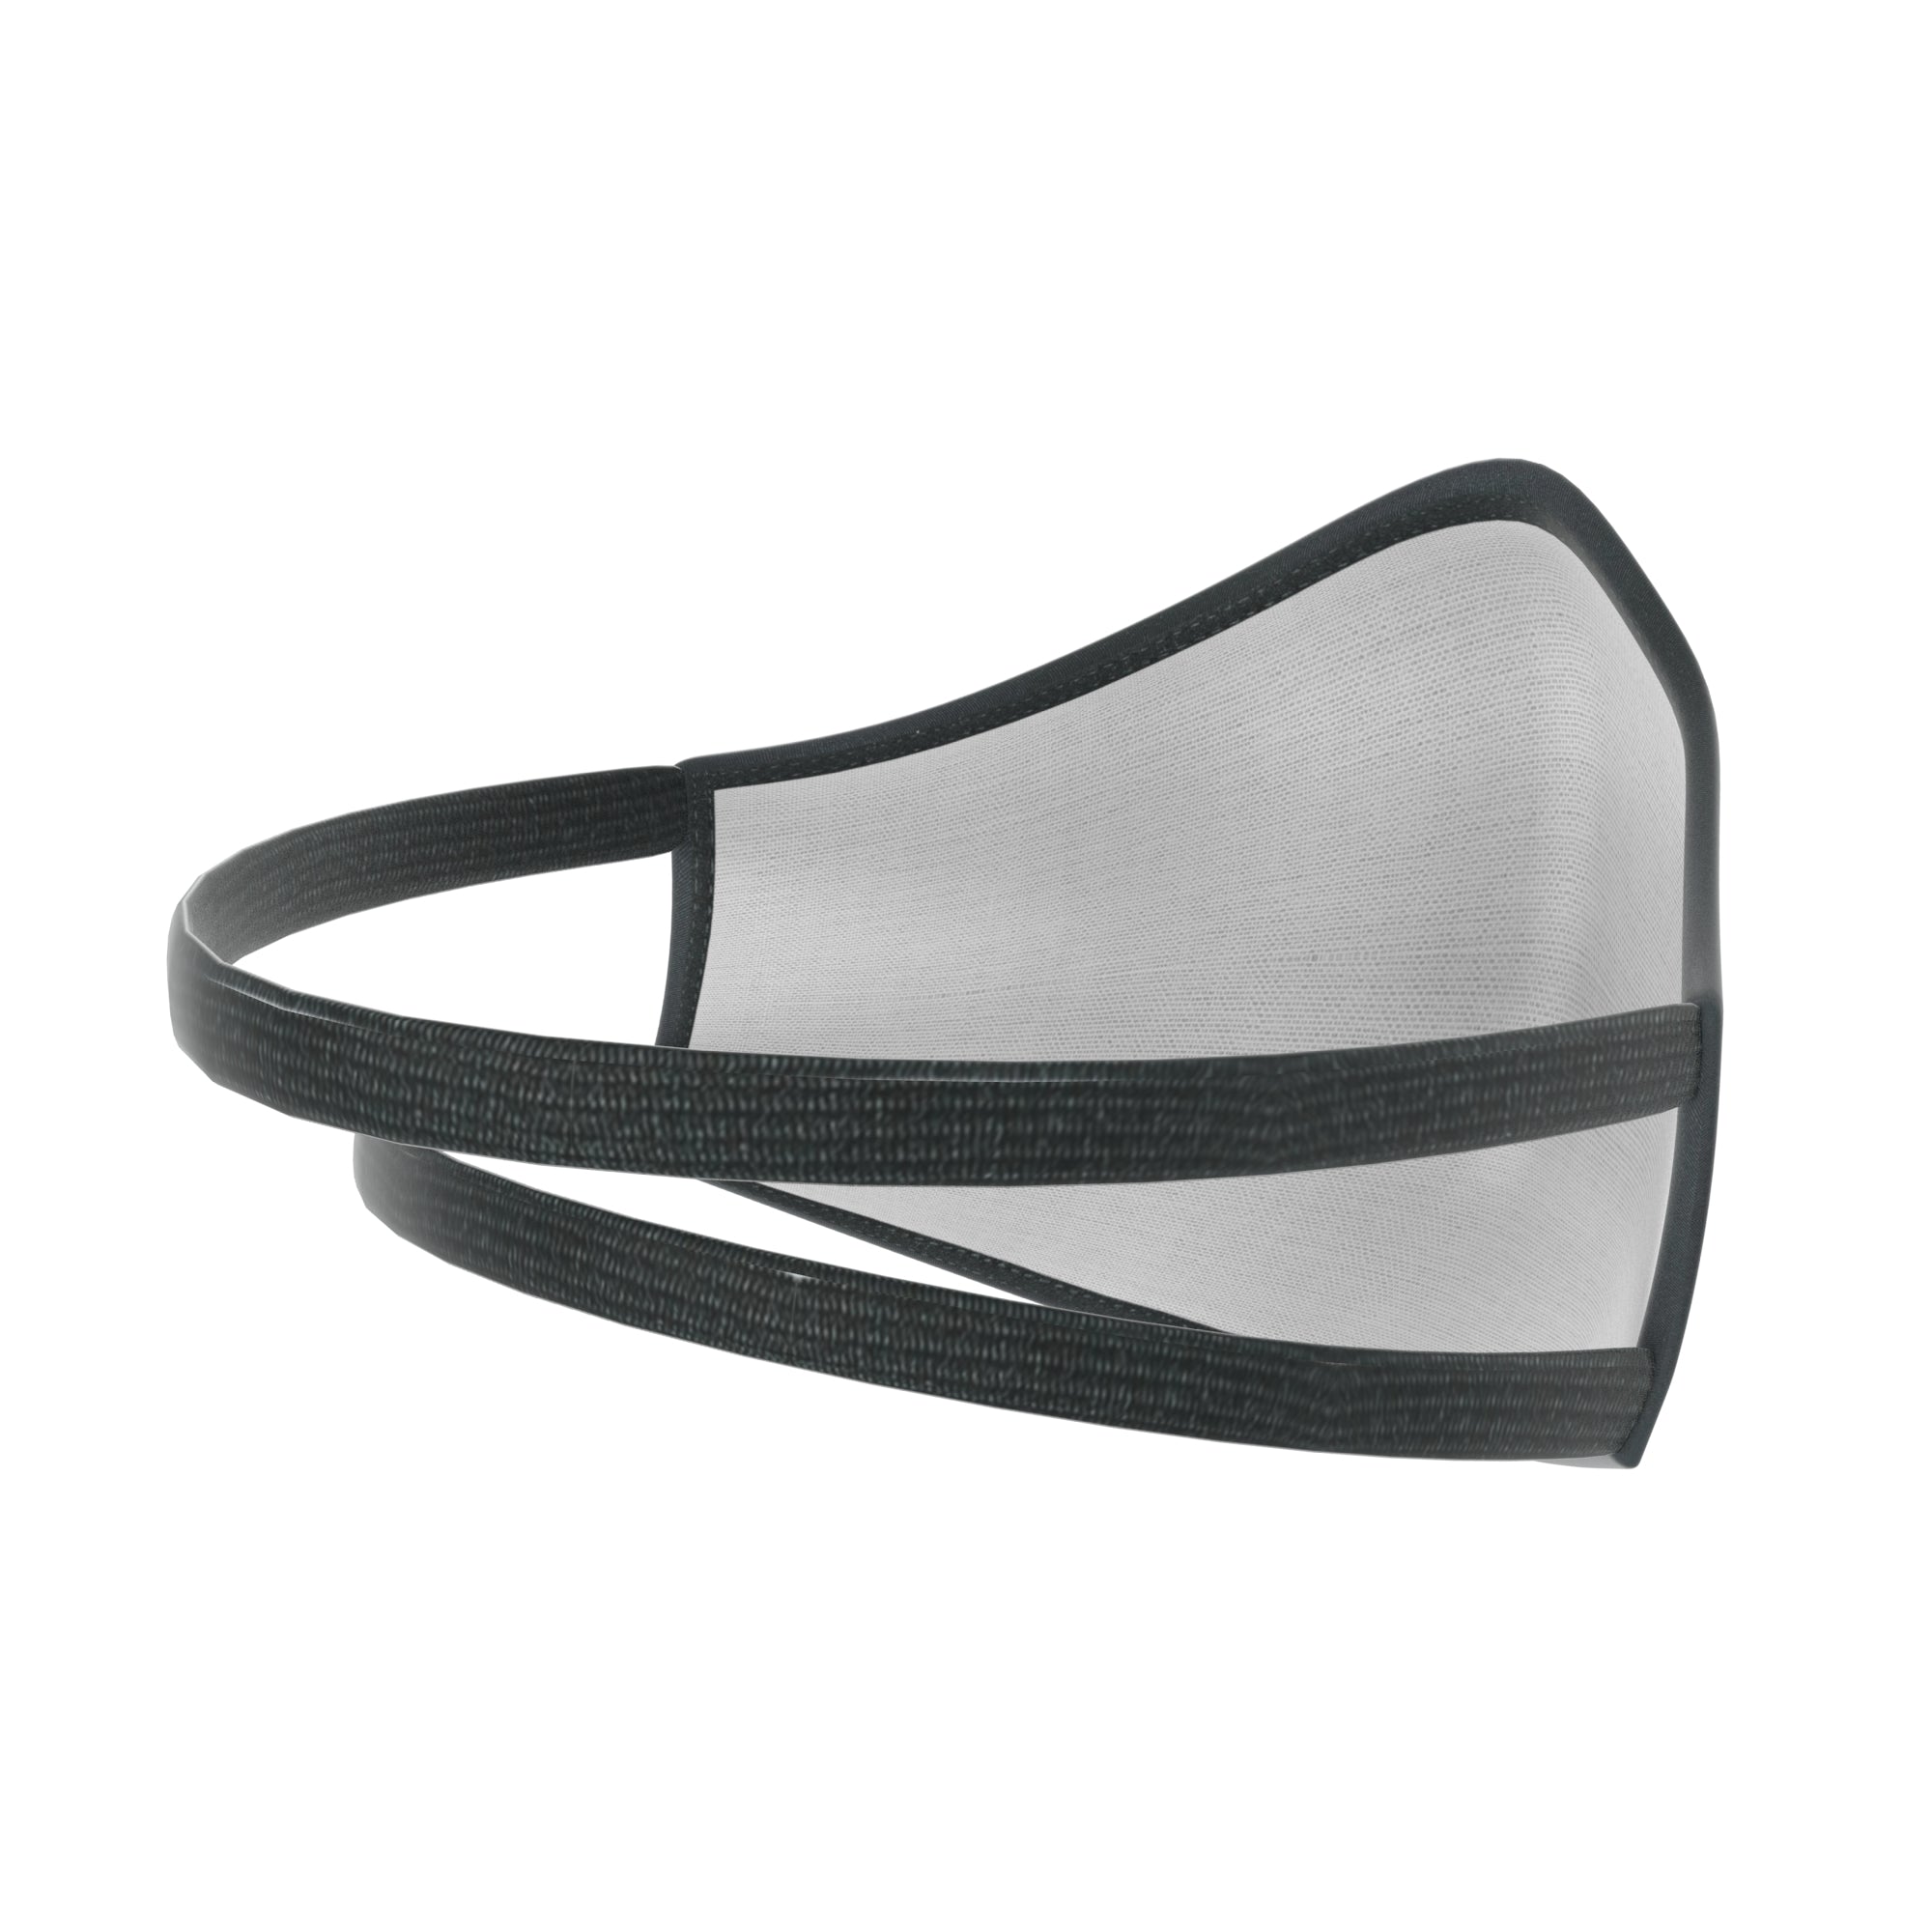 Men's face masks - Malebasics Defender Face Mask available at MensUnderwear.io - Image 1